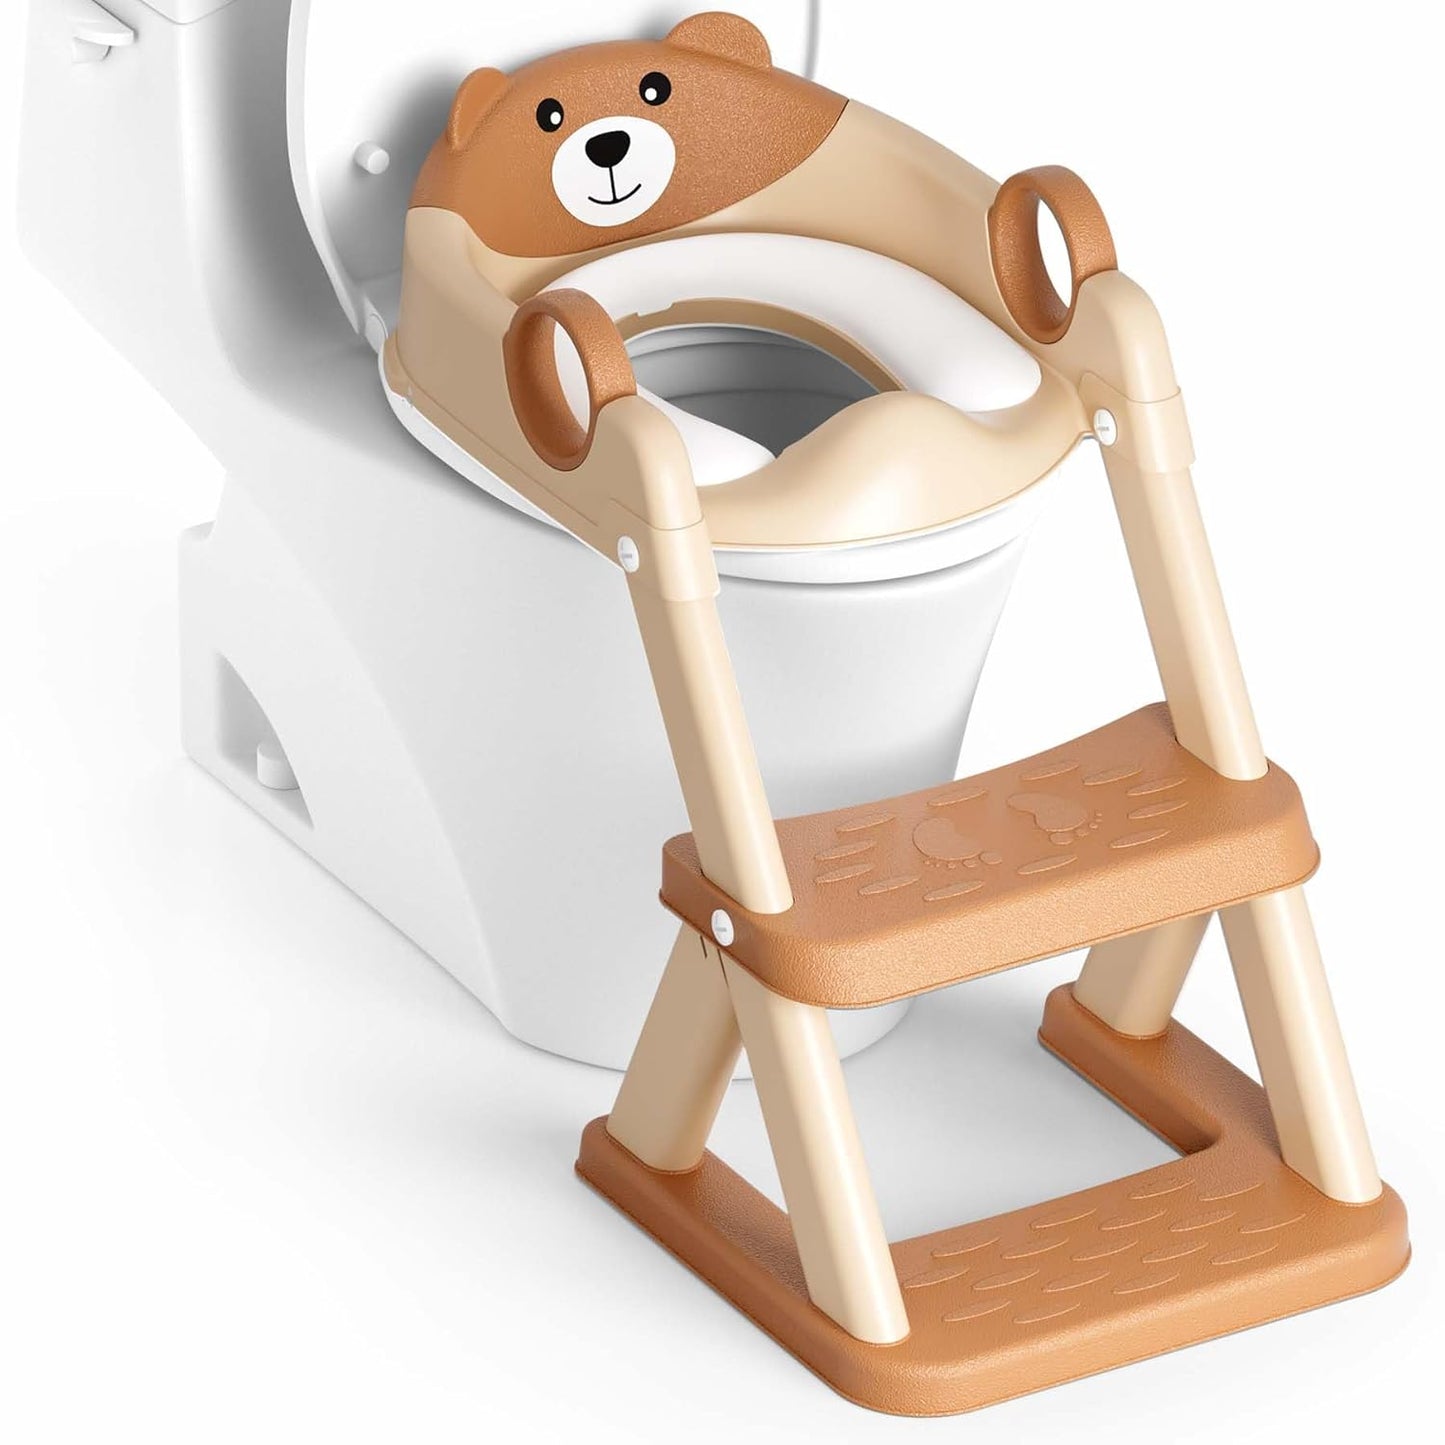 Rabb 1st Potty Training Seat, Upgrade Toddler Toilet Seat for Kids Boys Girls, 2 in 1 Potty Training Toilet, Splash Guard Anti-Slip Pad Step Stool